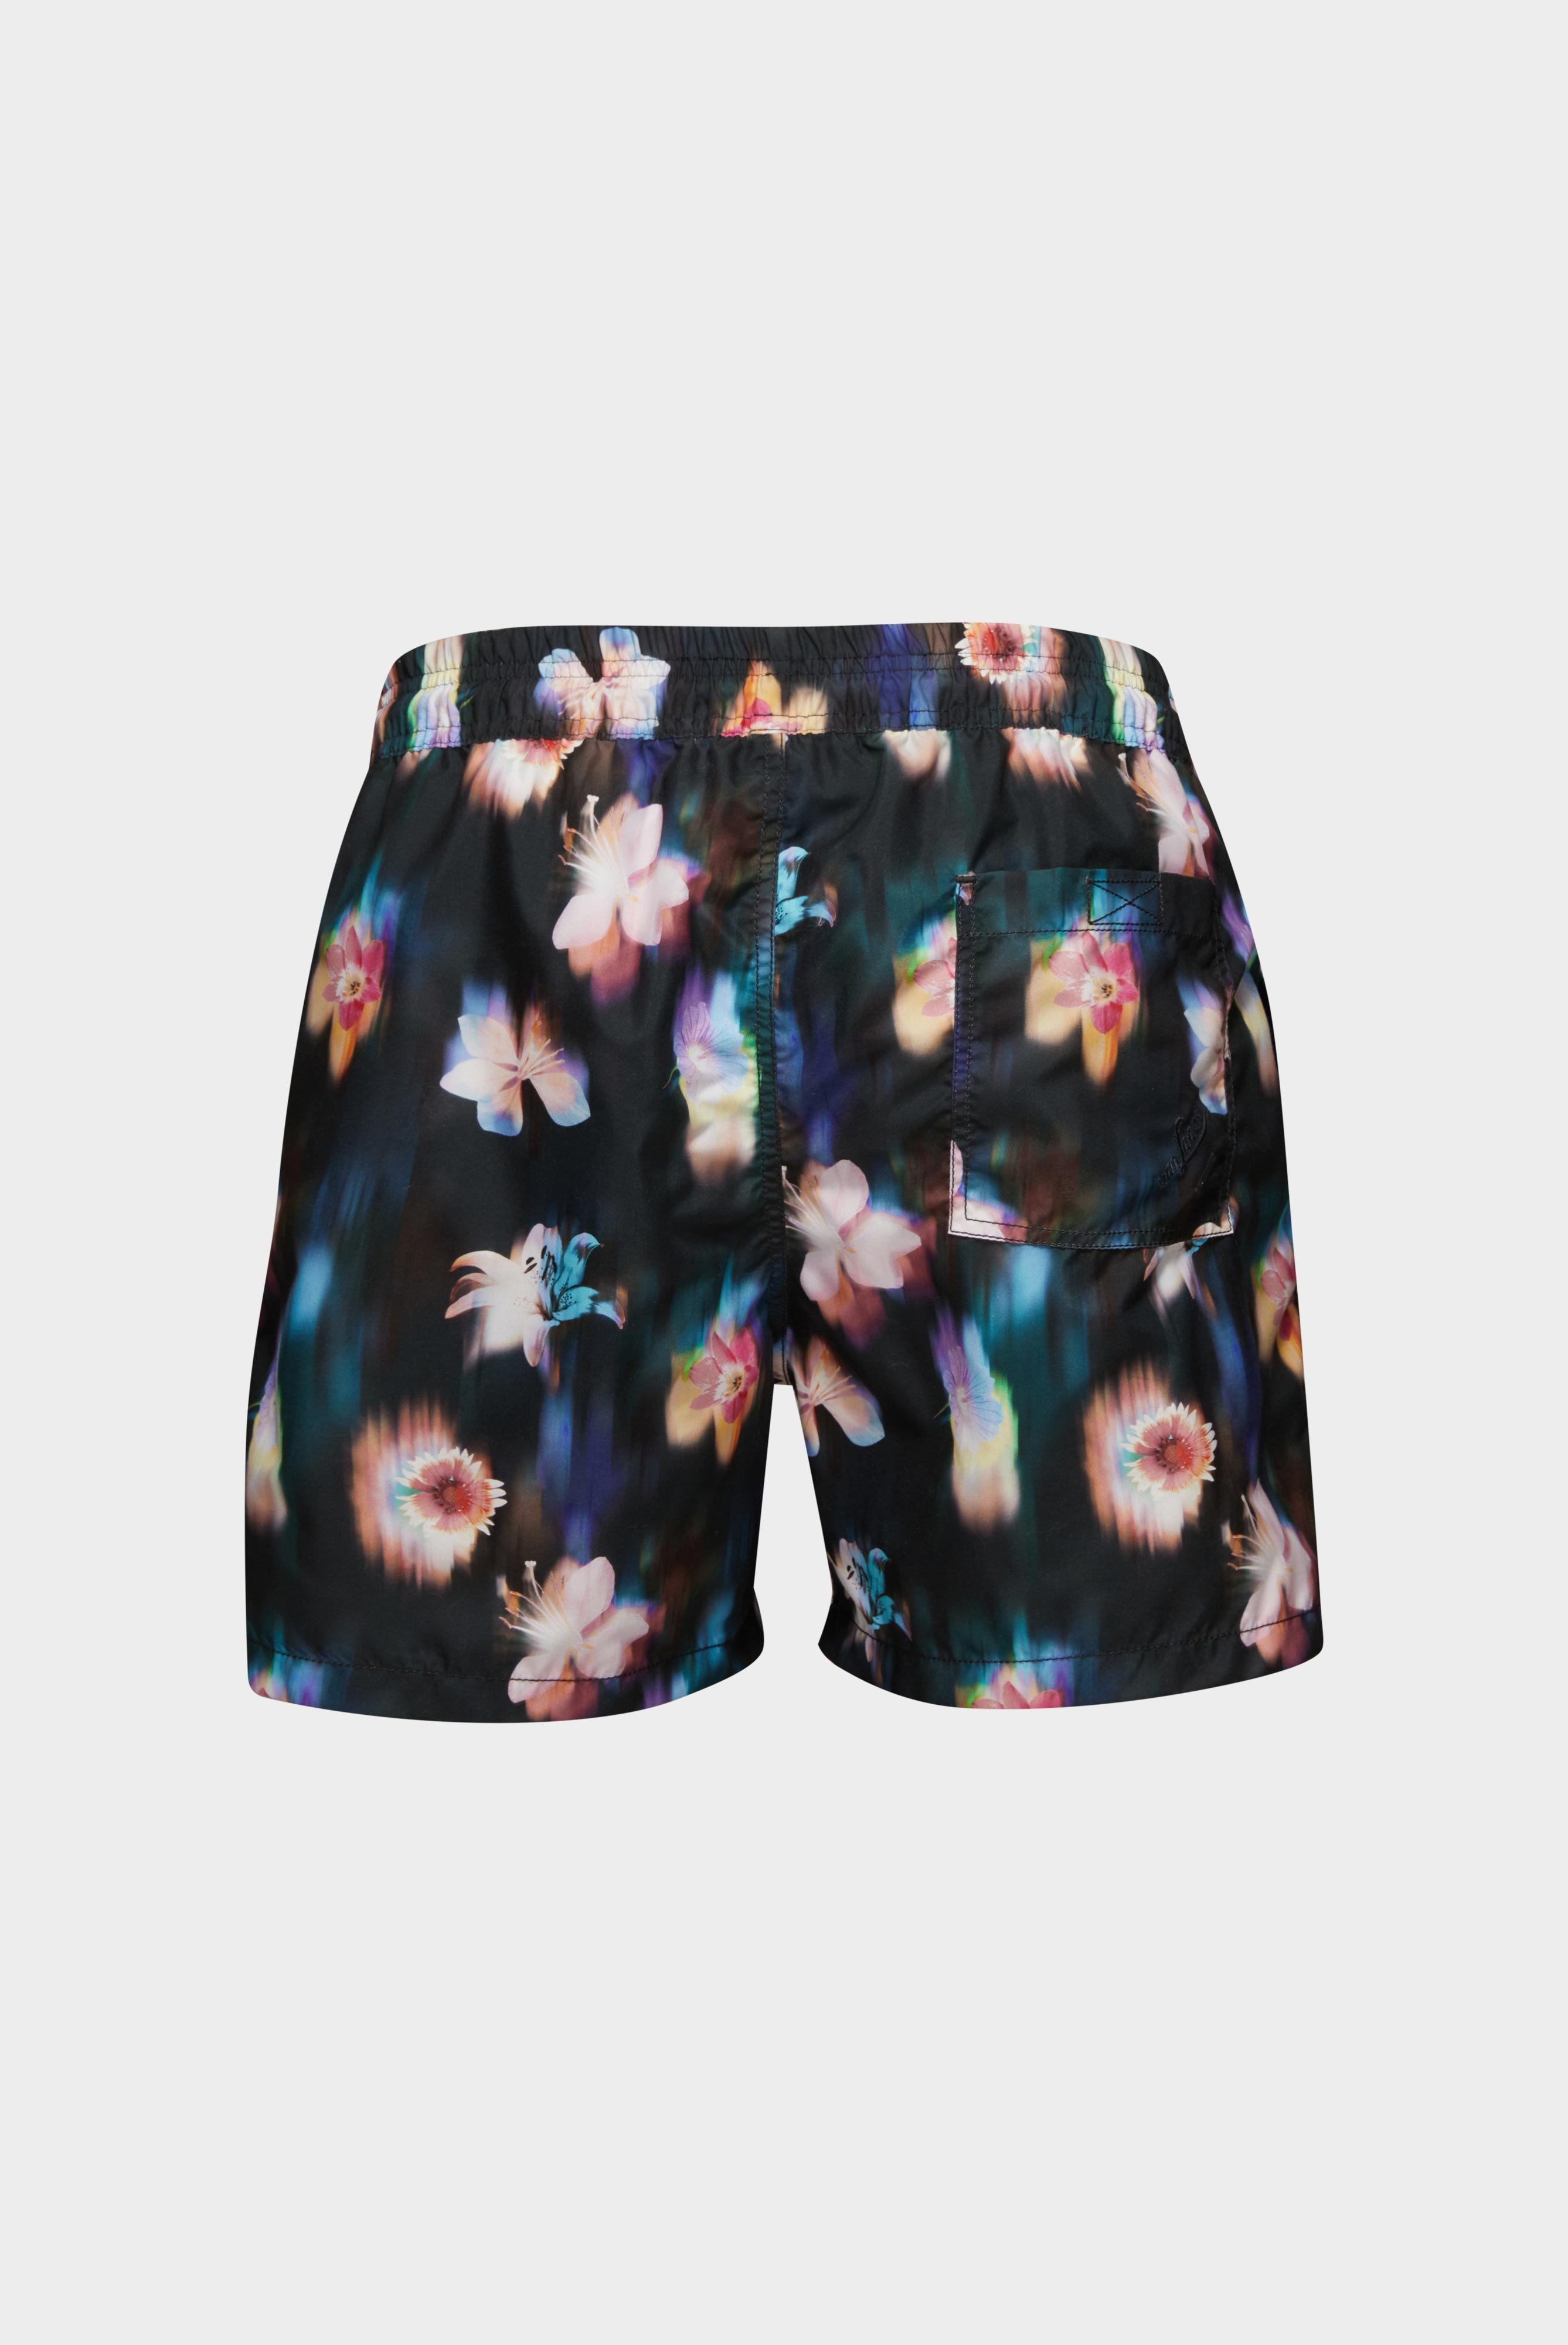 Swimwear+Swim Shorts with Floral Print+91.1179..170746.783.48